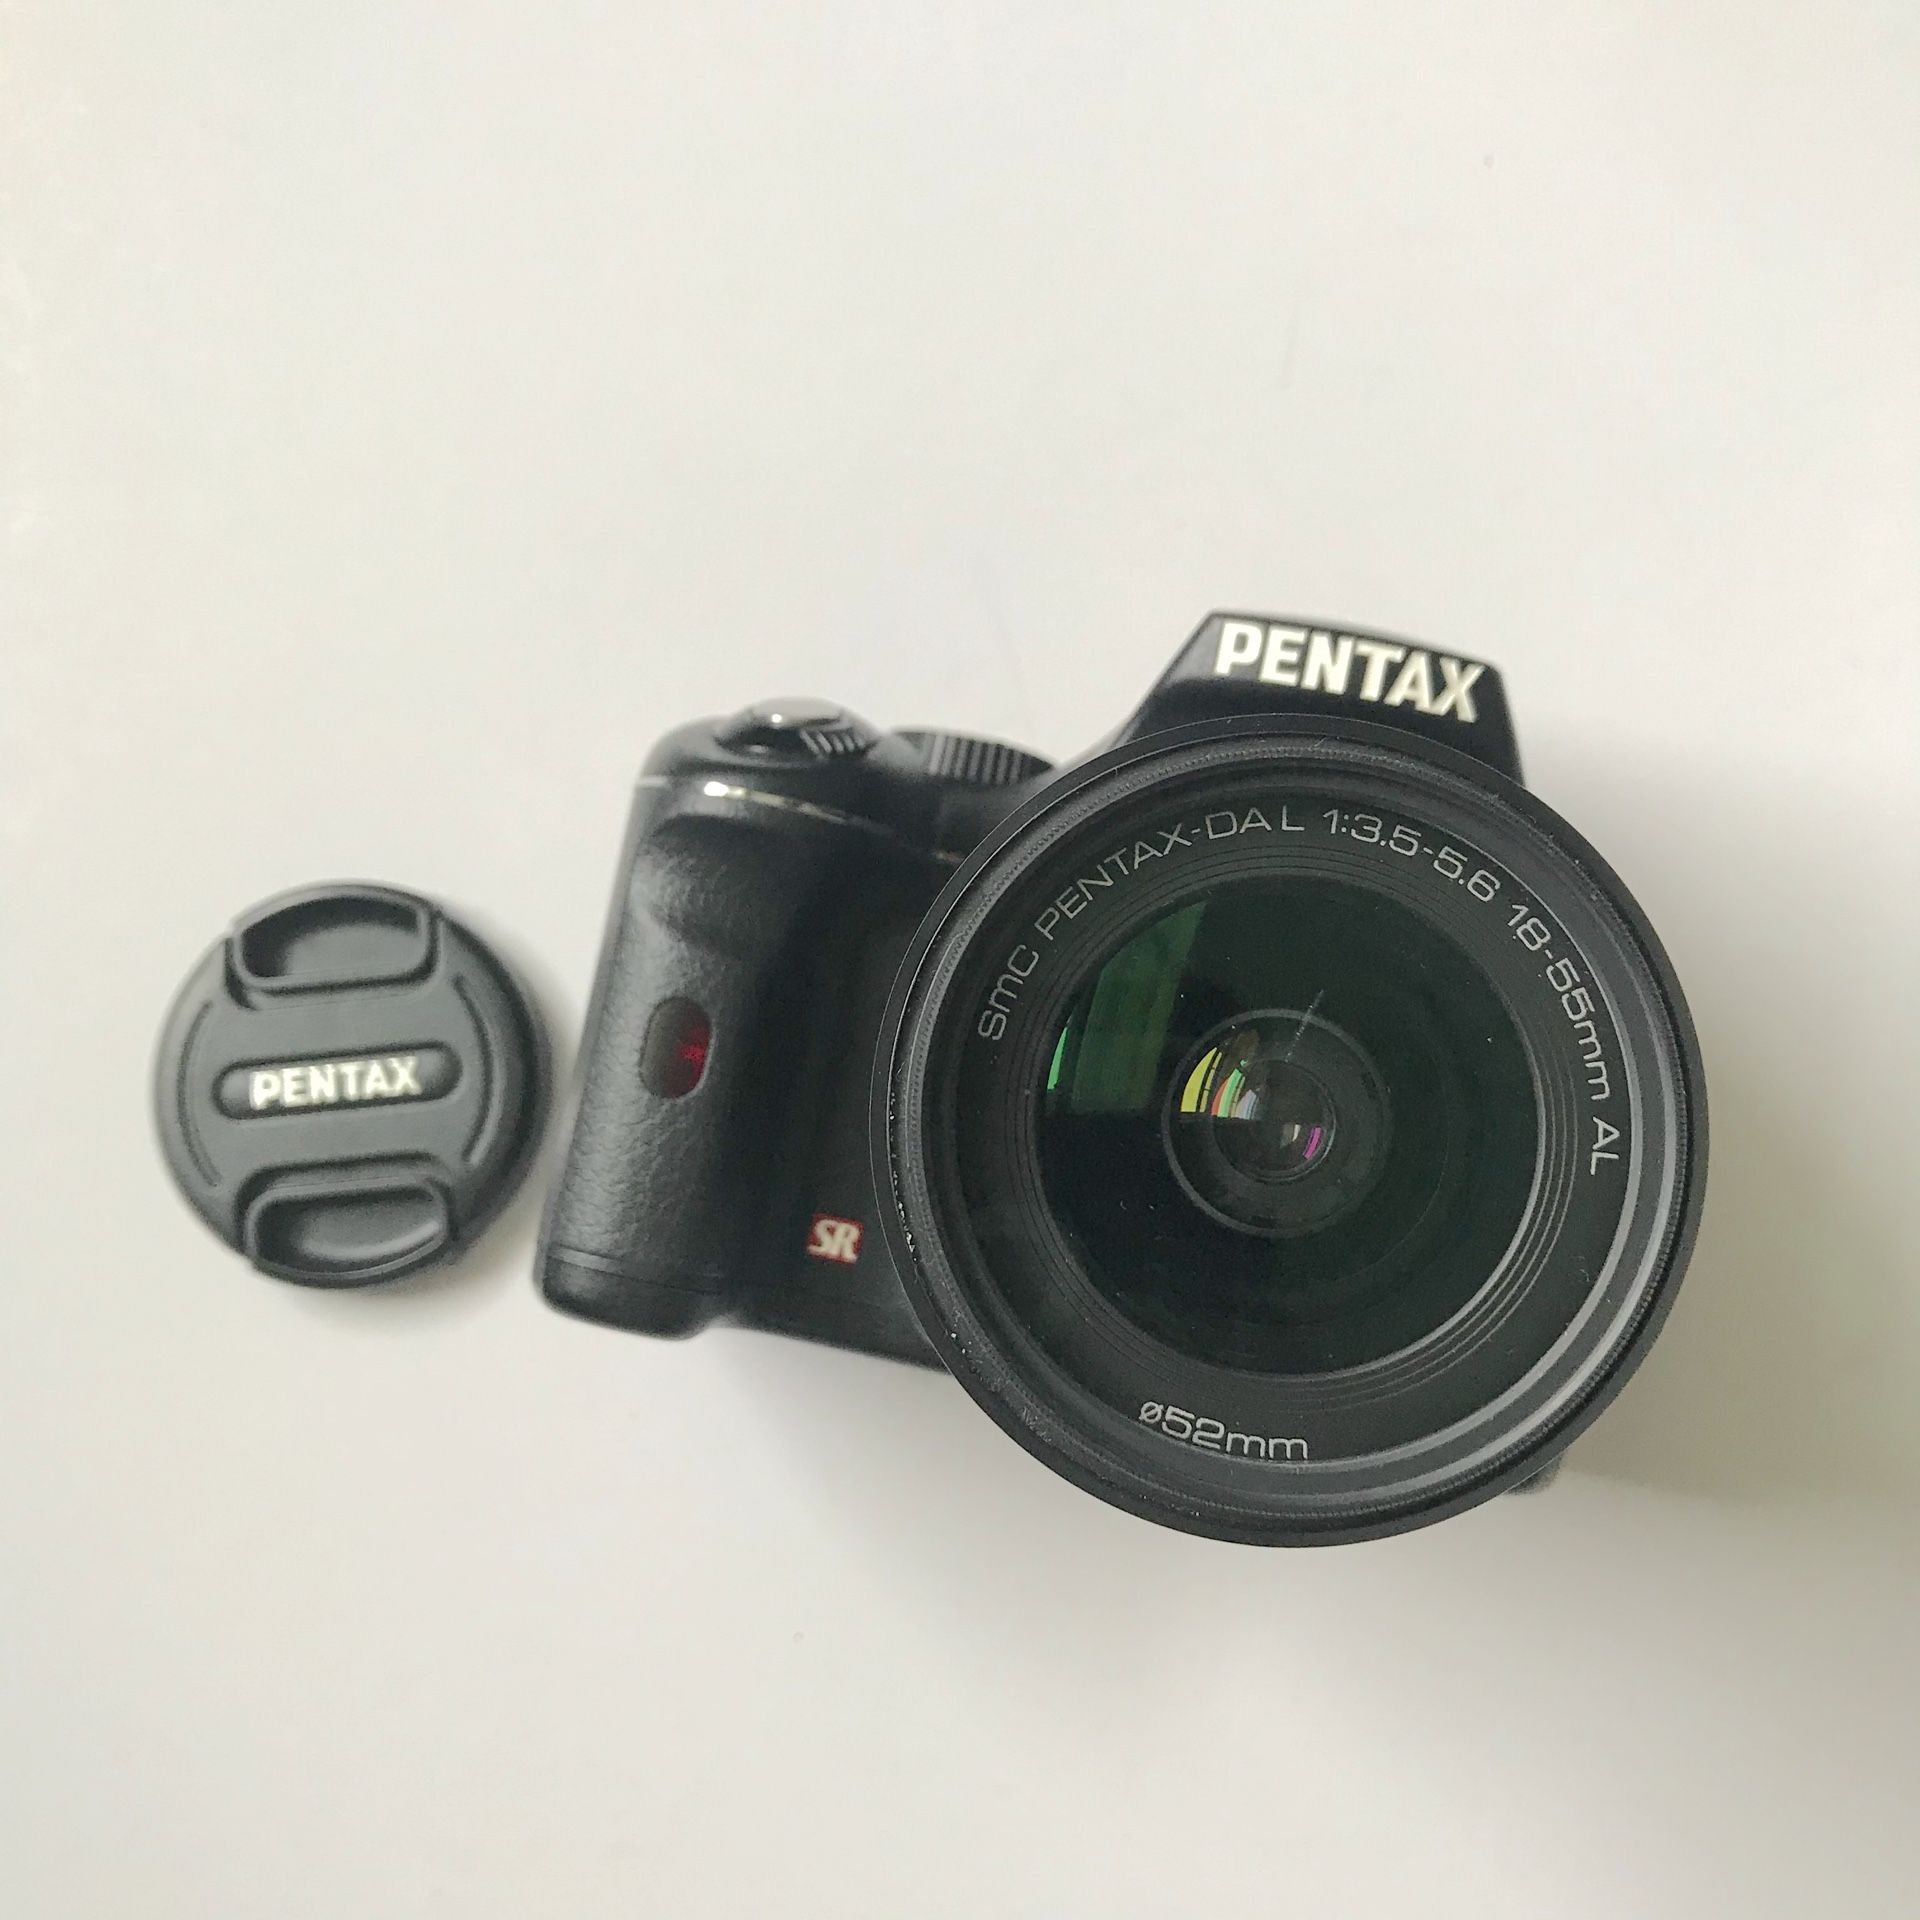 Pentax camera& oral care bundle